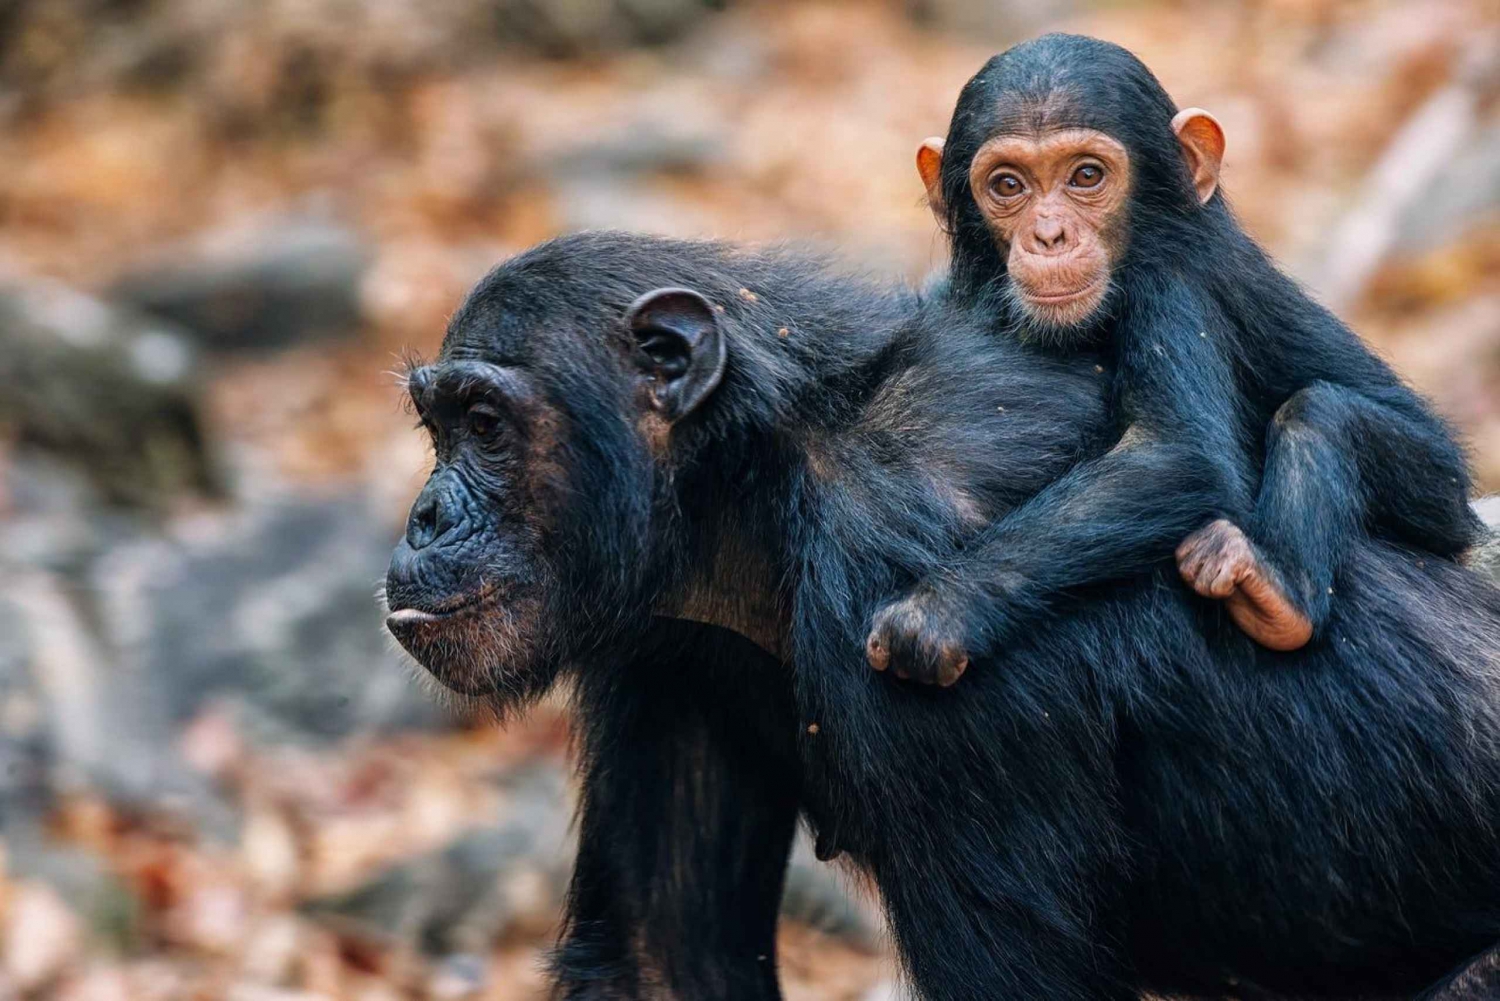 Unforgettable Chimpanzee Encounter (Encontro inesquecível com chimpanzés):